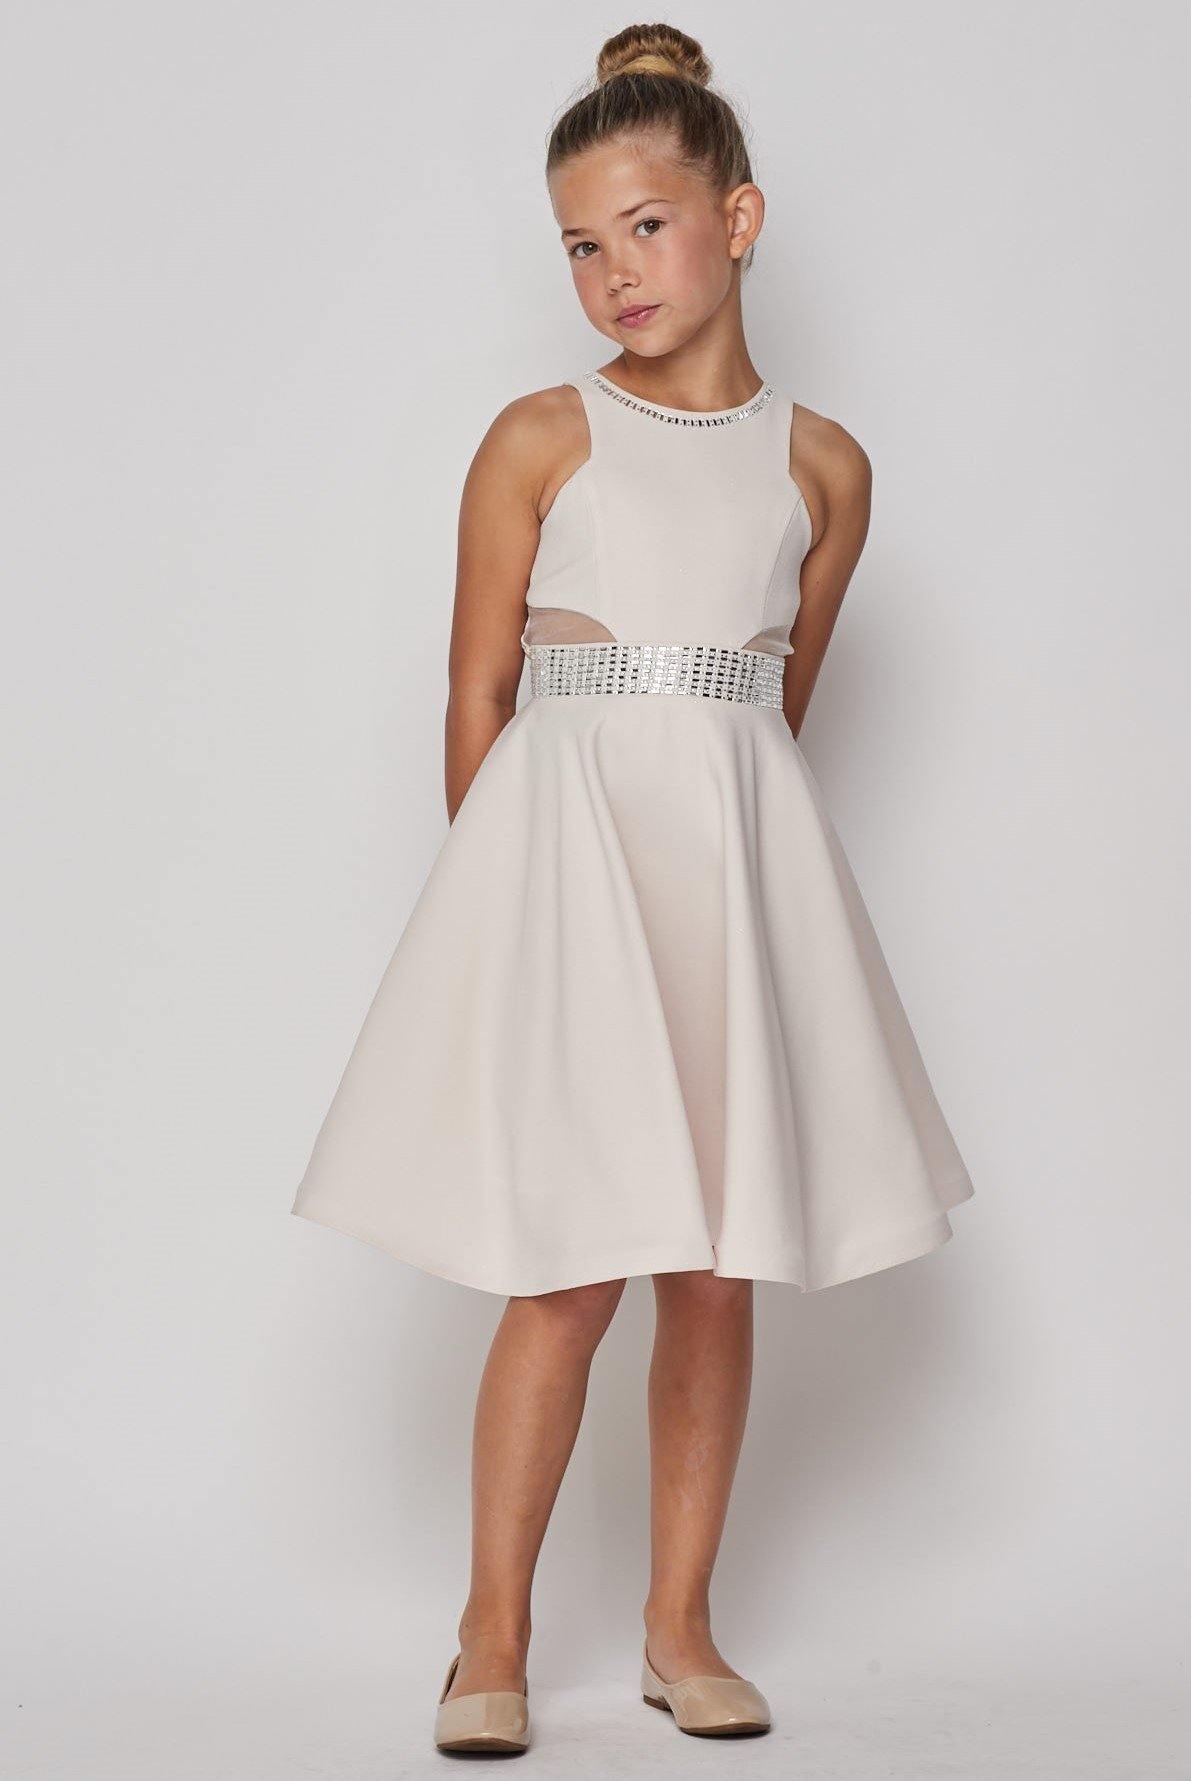 Short Sparkle Flower Girl Dress - The Dress Outlet Cinderella Couture